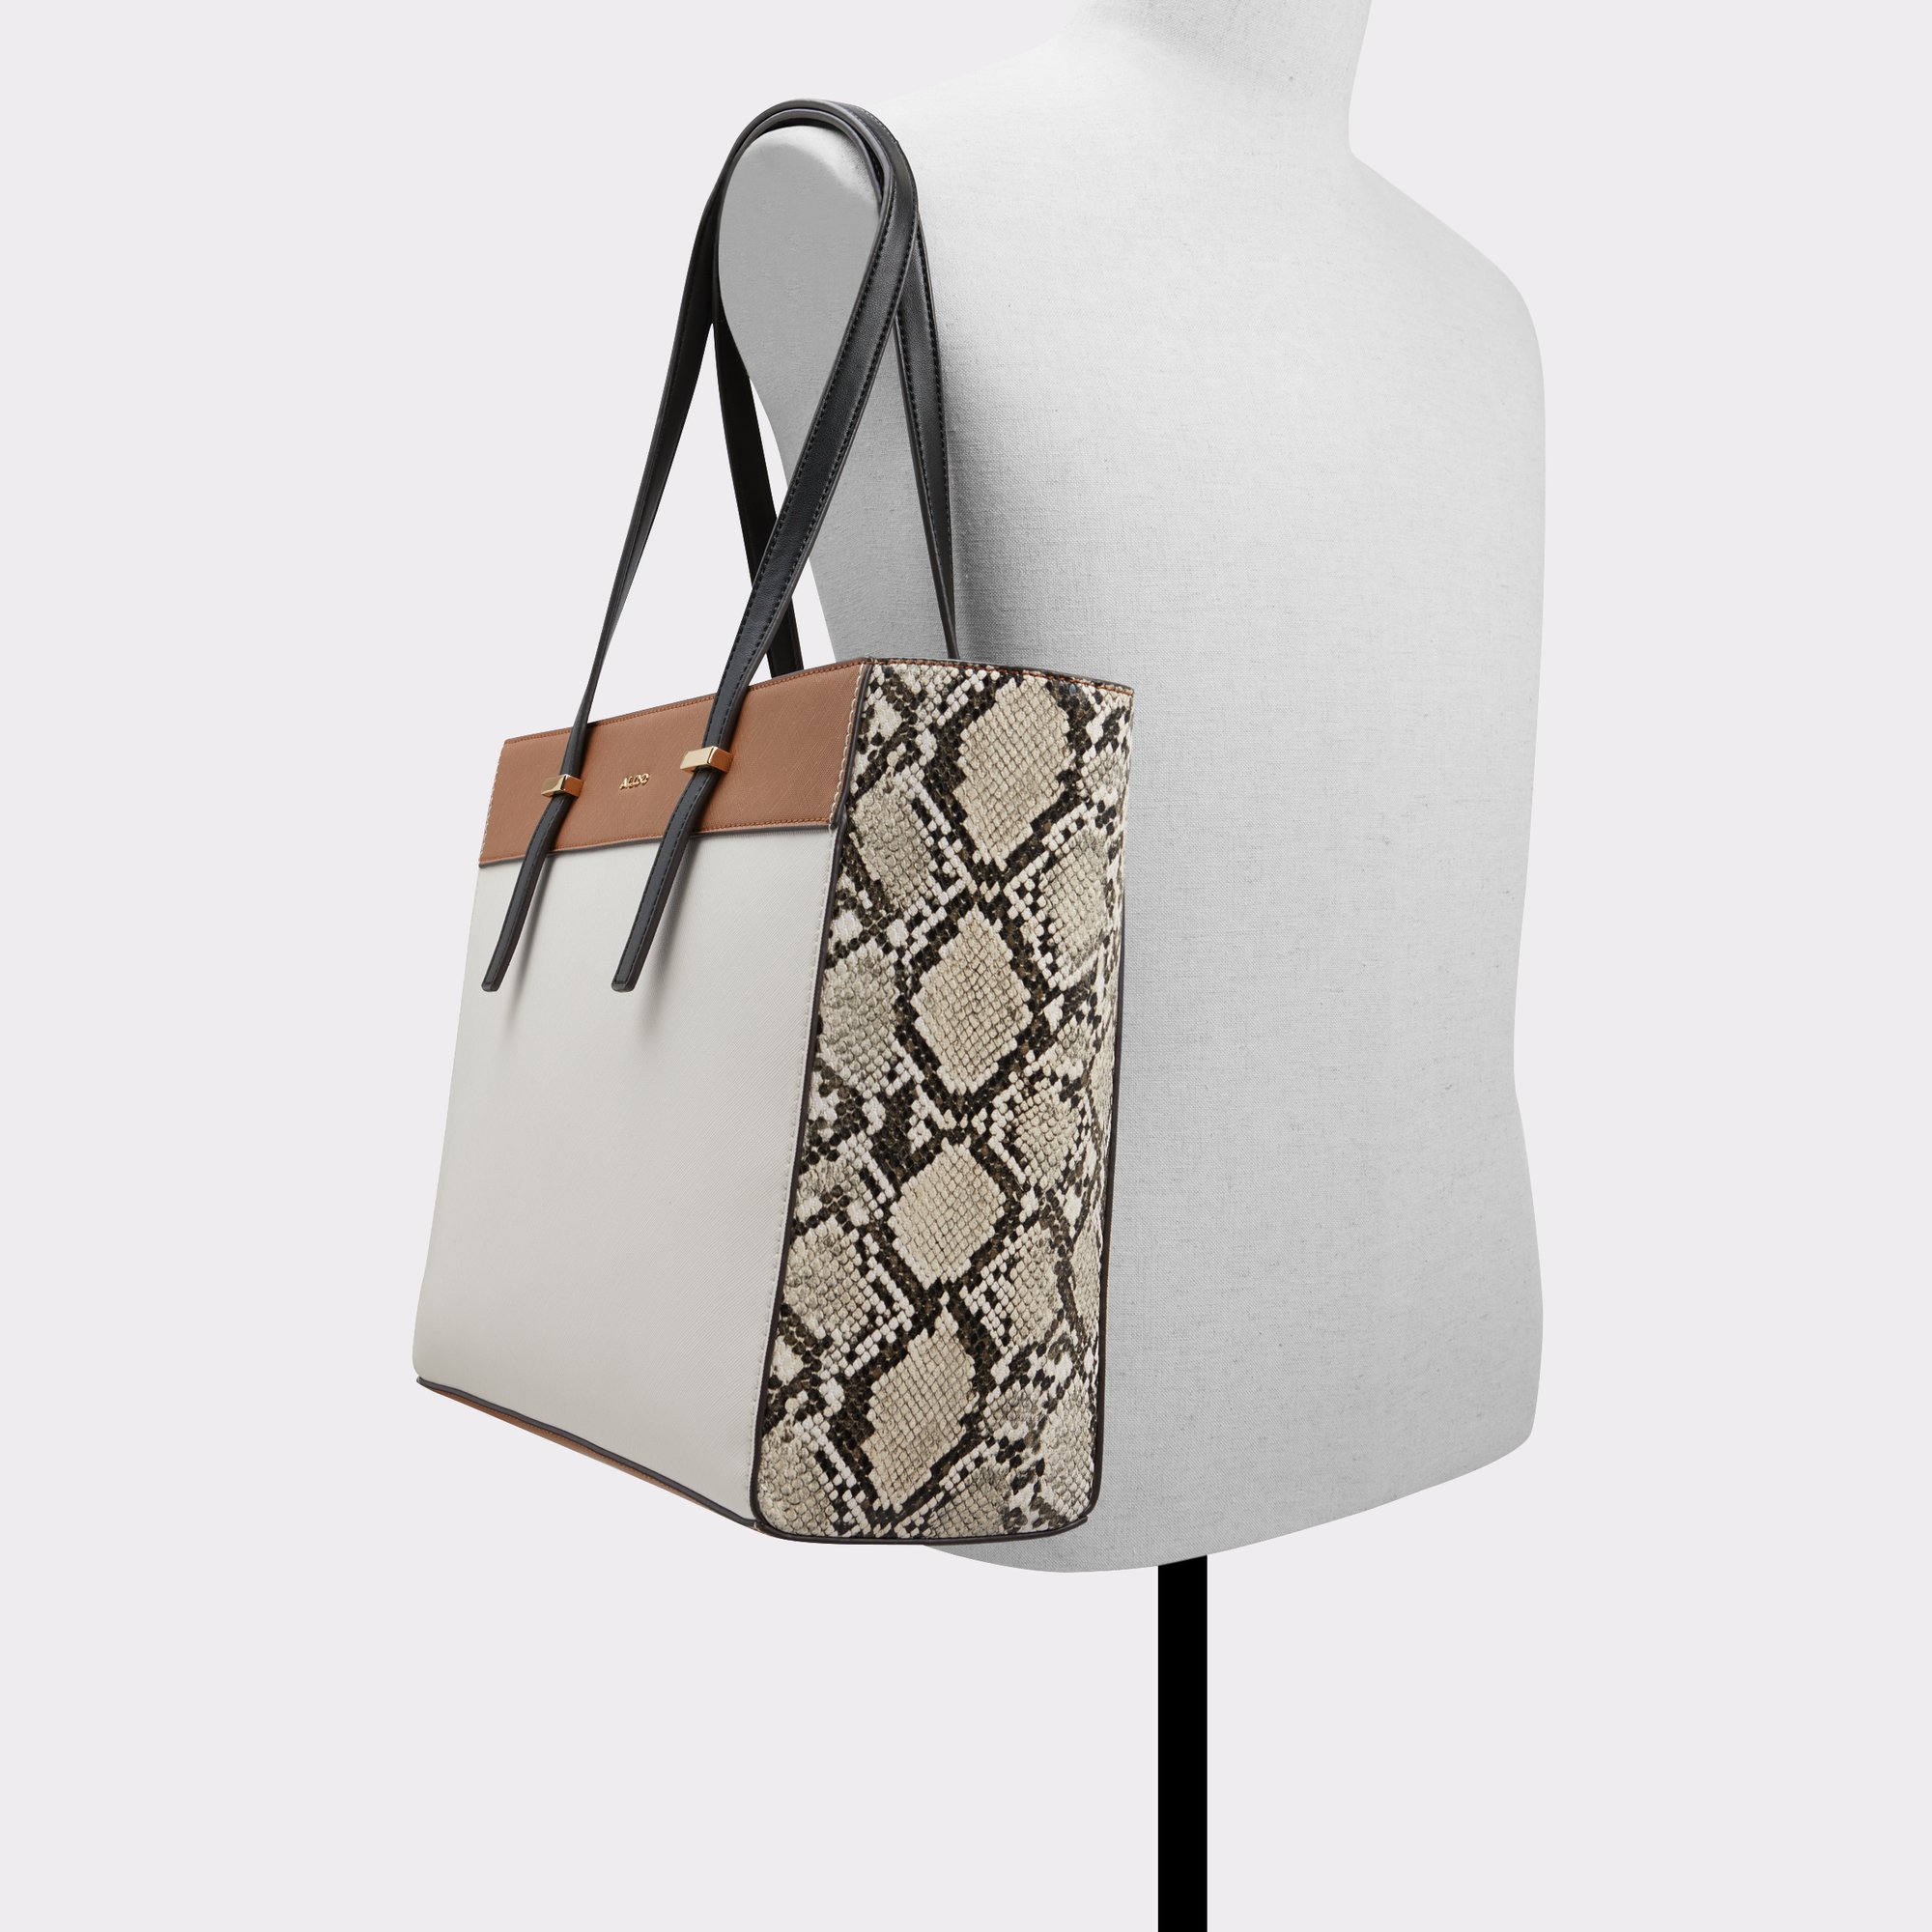 ALDO Women's Agroliaa Top Handle Bag, Bone Multi: Handbags